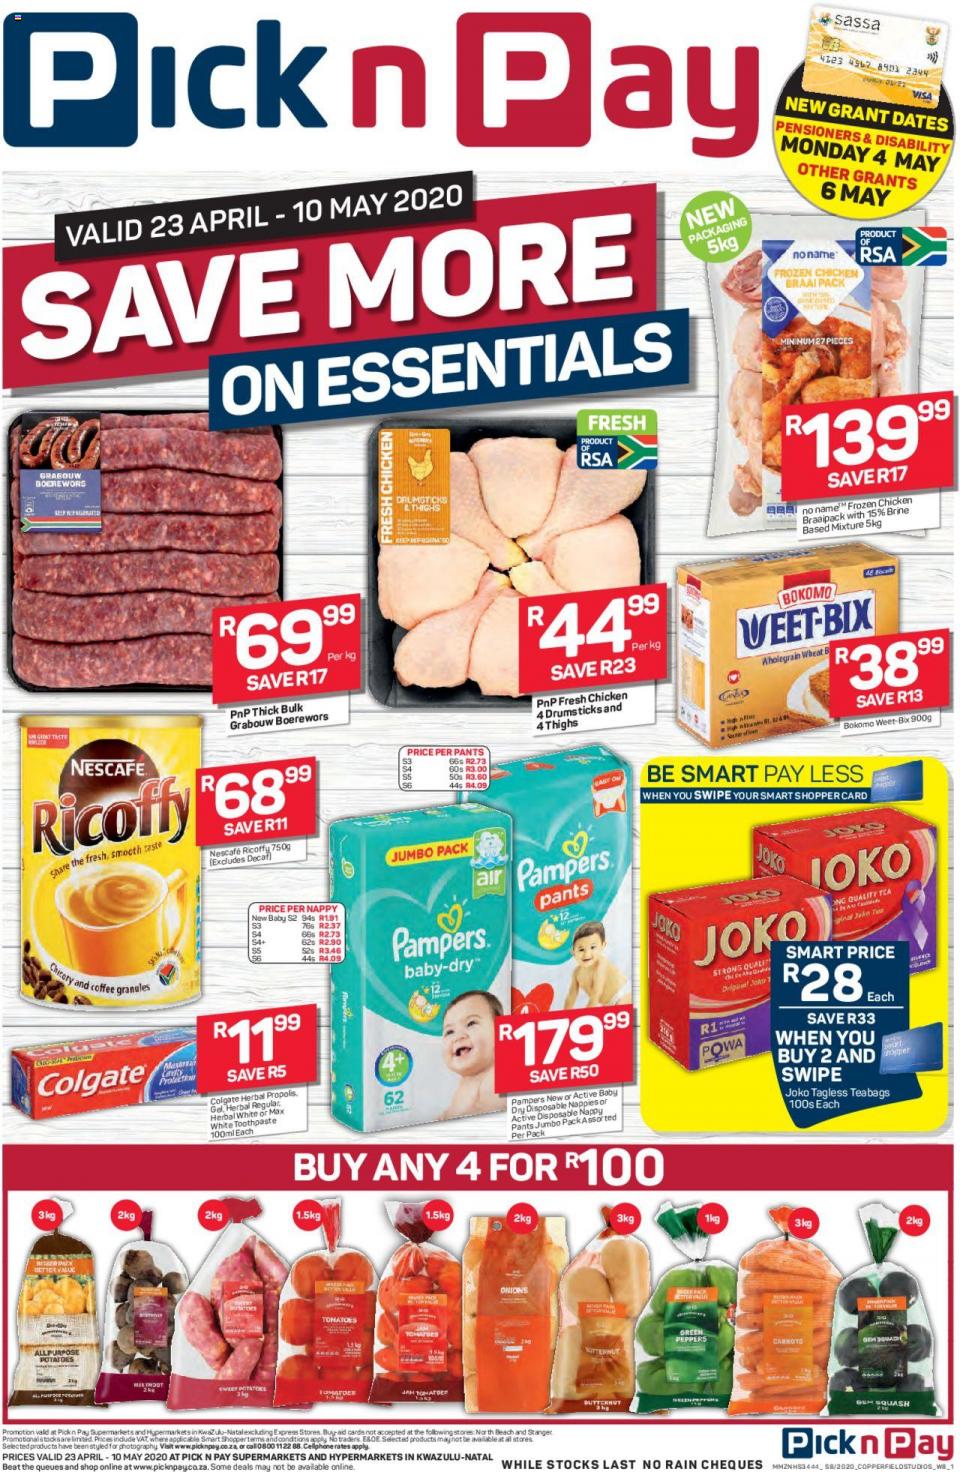 pick n pay specials save more essentials 23 april 2020